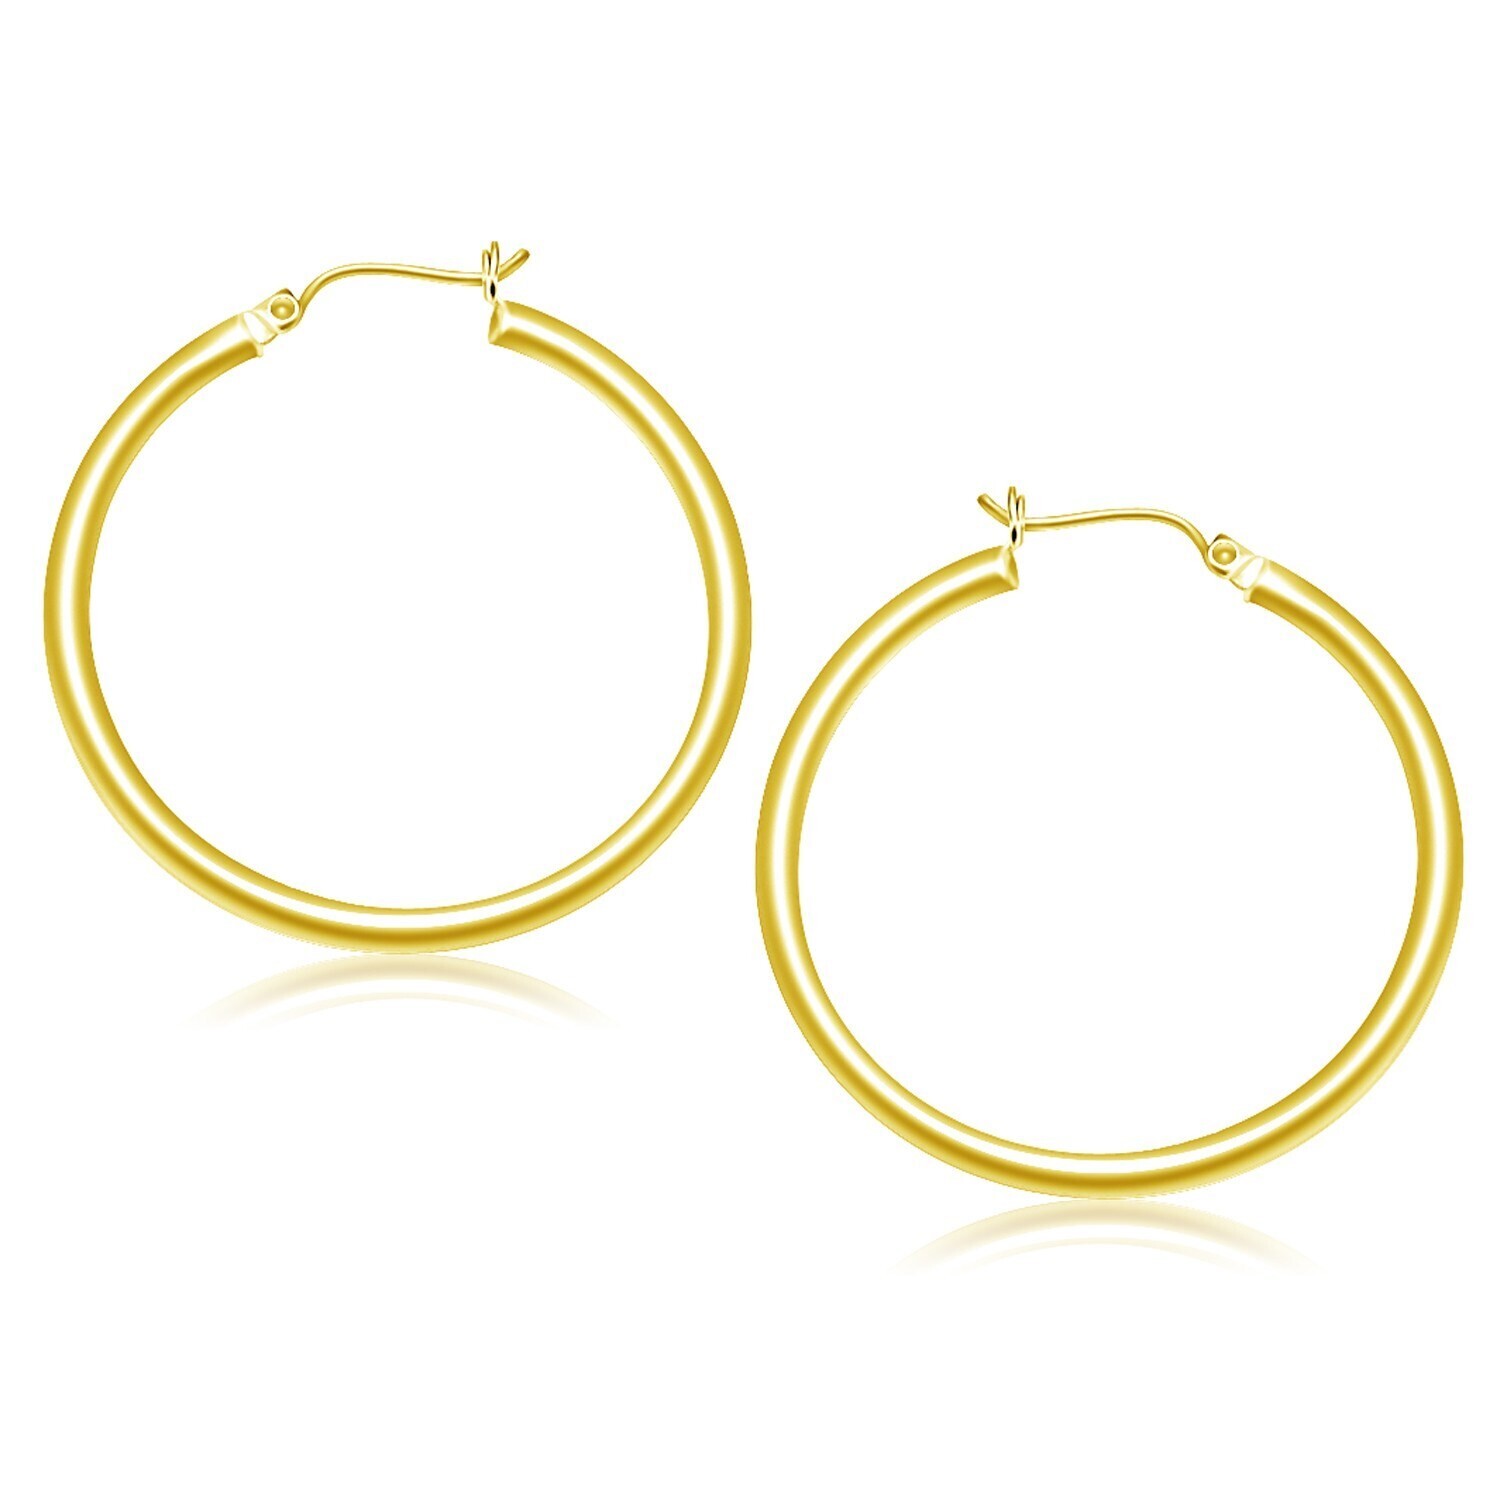 10k Yellow Gold Polished Hoop Earrings (40 mm)